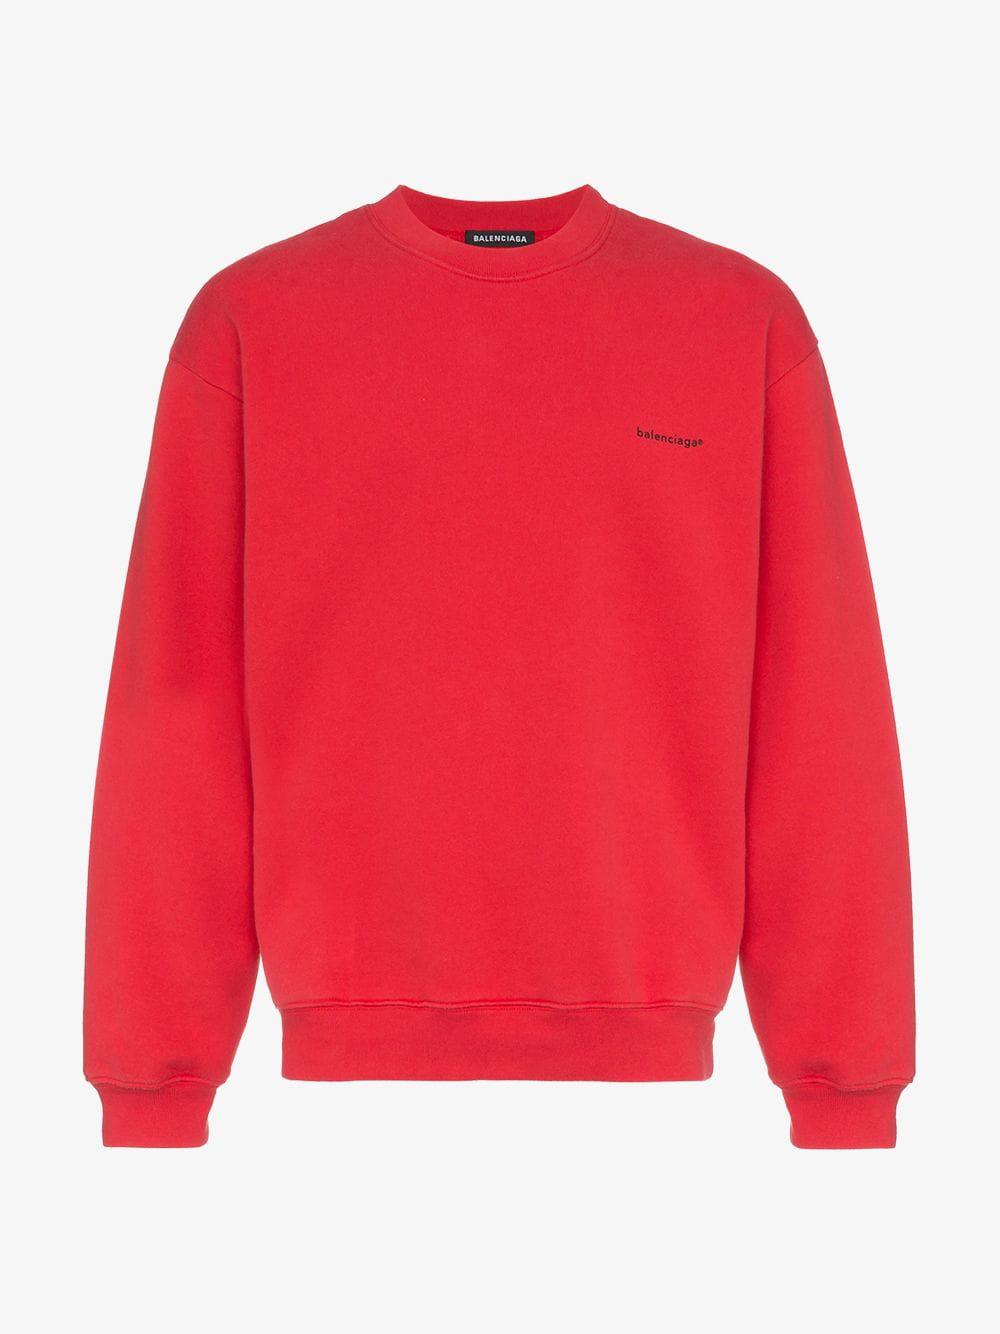 Balenciaga Cotton Copyright Logo Print Sweatshirt in Red for Men - Lyst